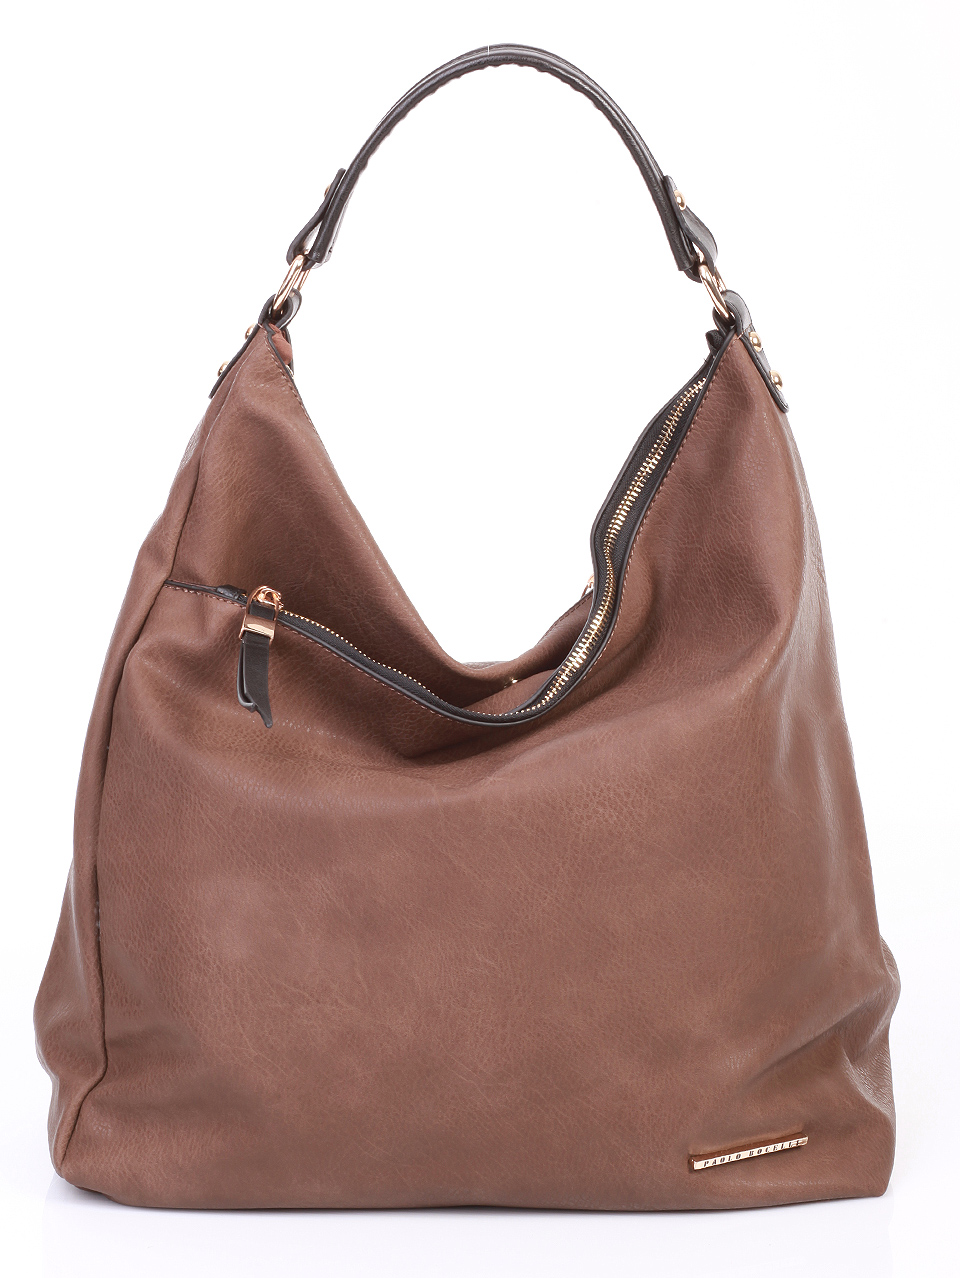 Brown Leather Handbag, Brown Tote, Leather Tote, Brown Purse, Winter Handbag, Woman Gift